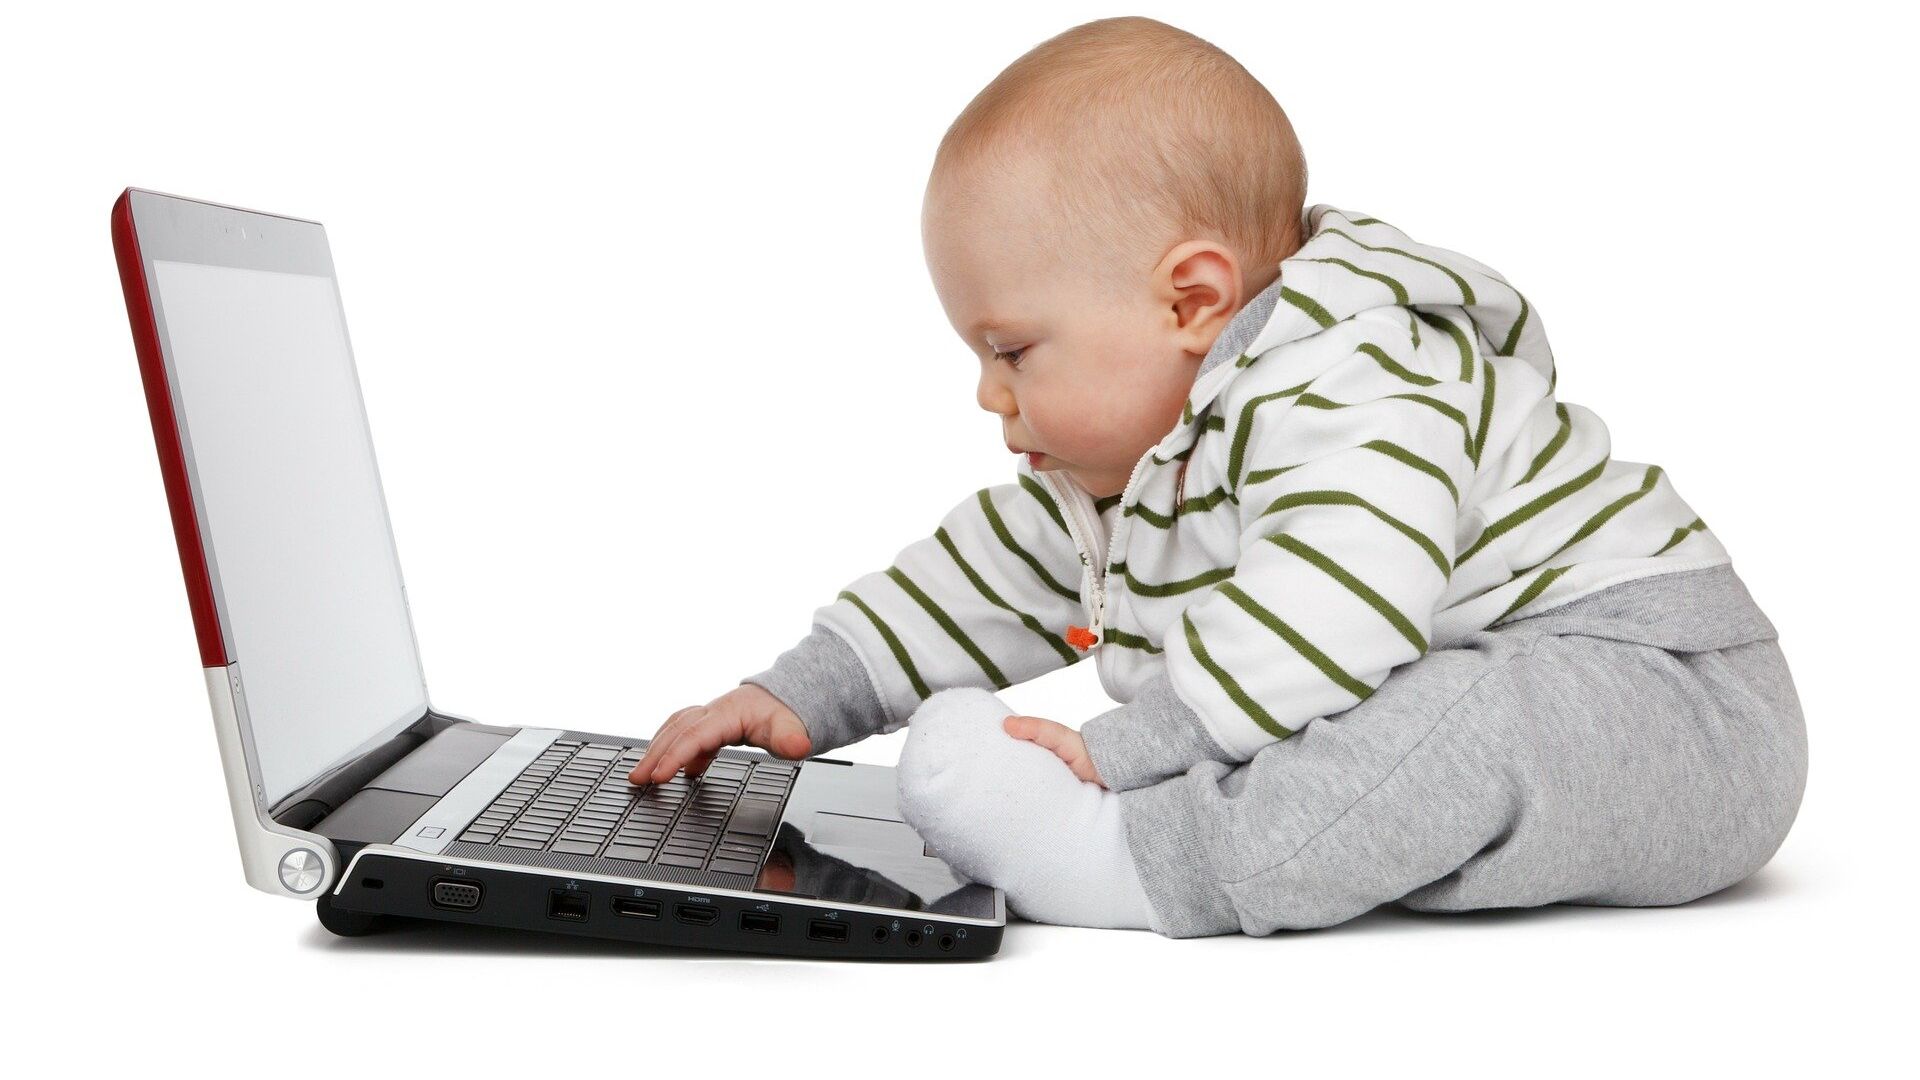 Baby playing with a laptop - Sputnik International, 1920, 23.09.2021